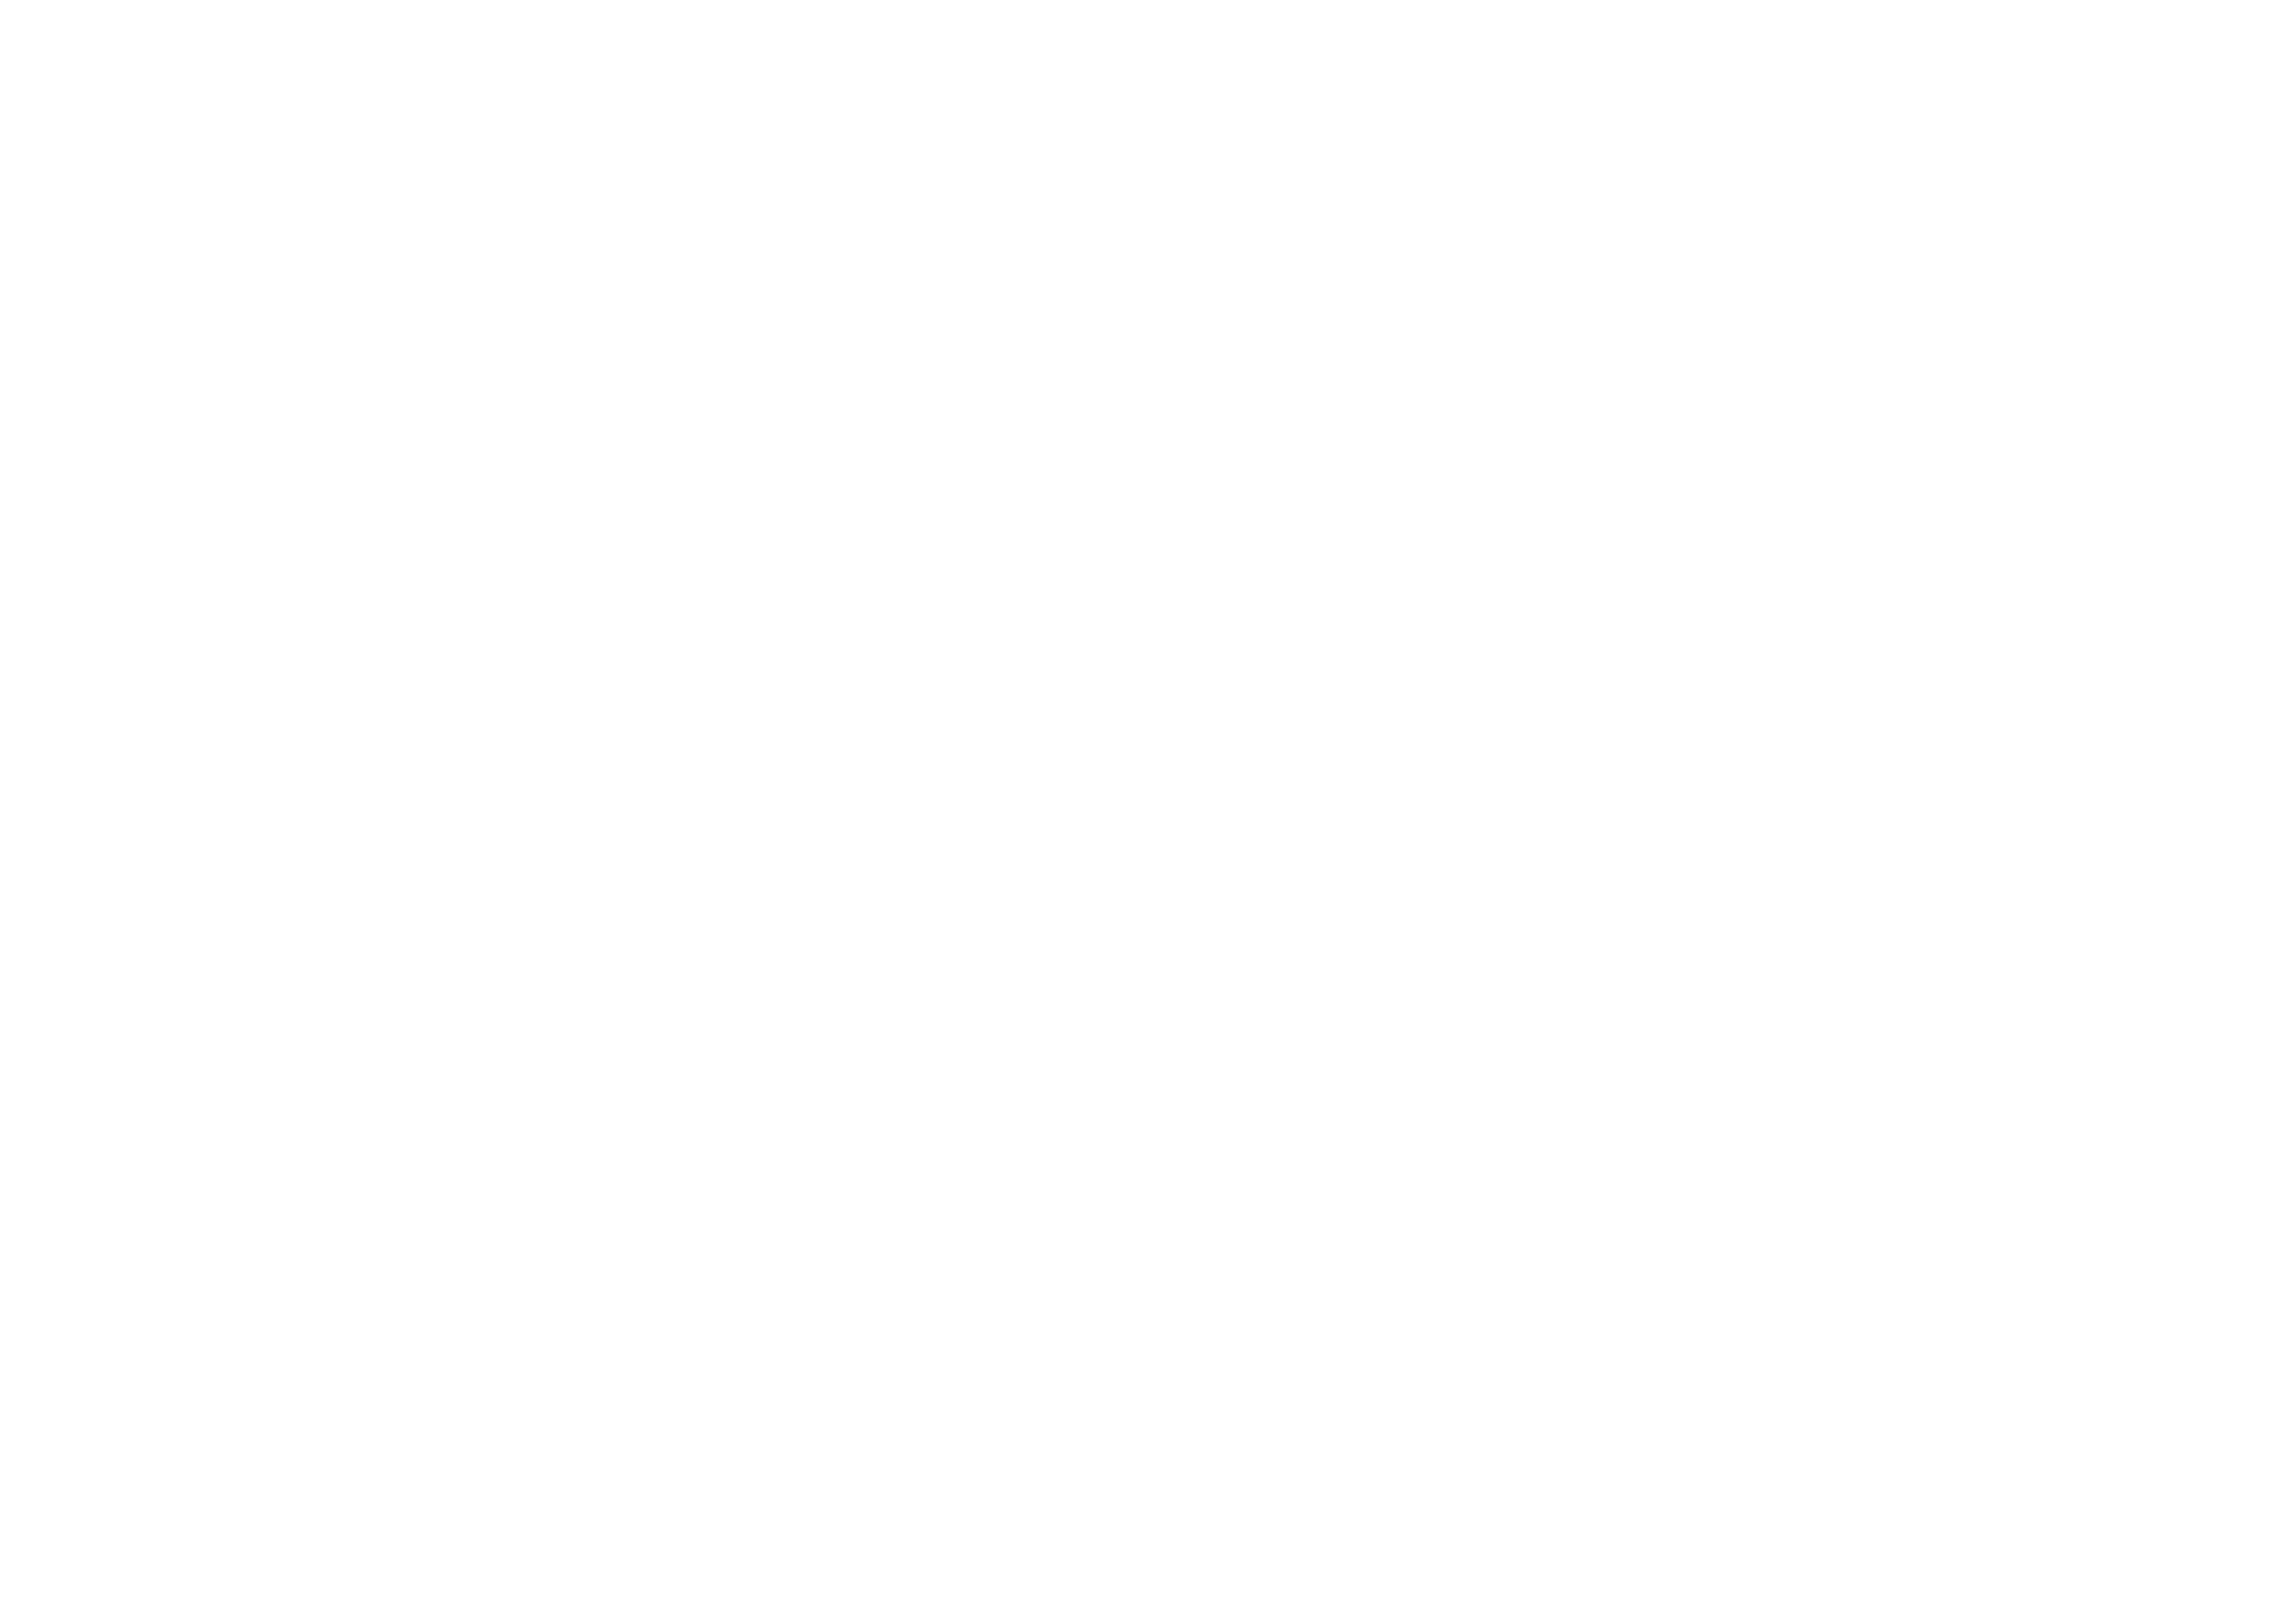 The Vinyl Archivist